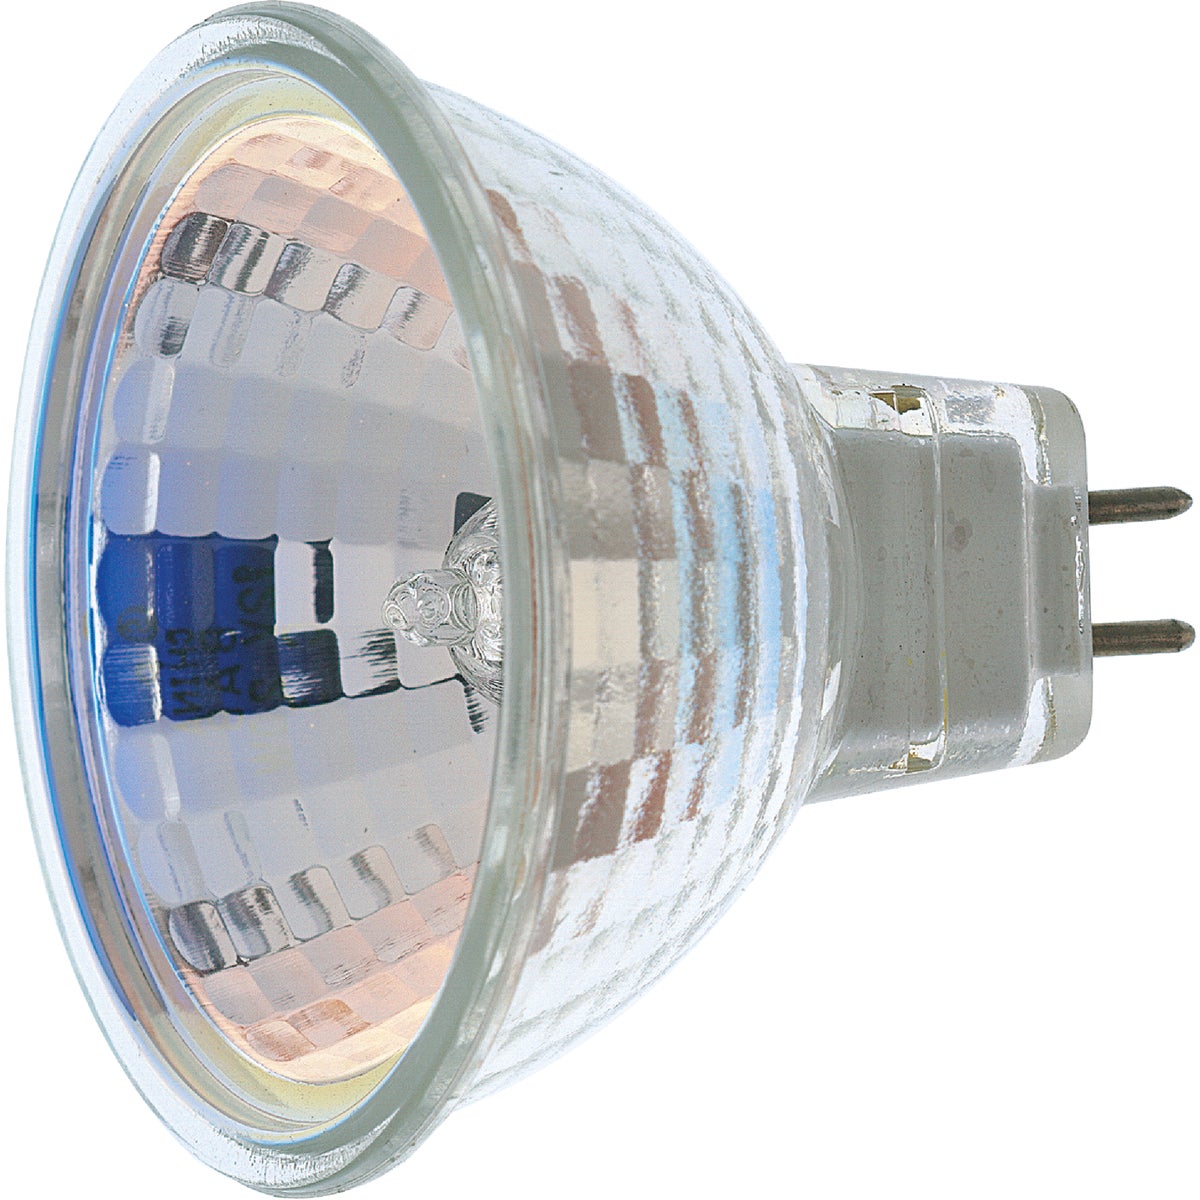 Satco 60W Equivalent Clear G8 Base MR16 Halogen Floodlight Light Bulb